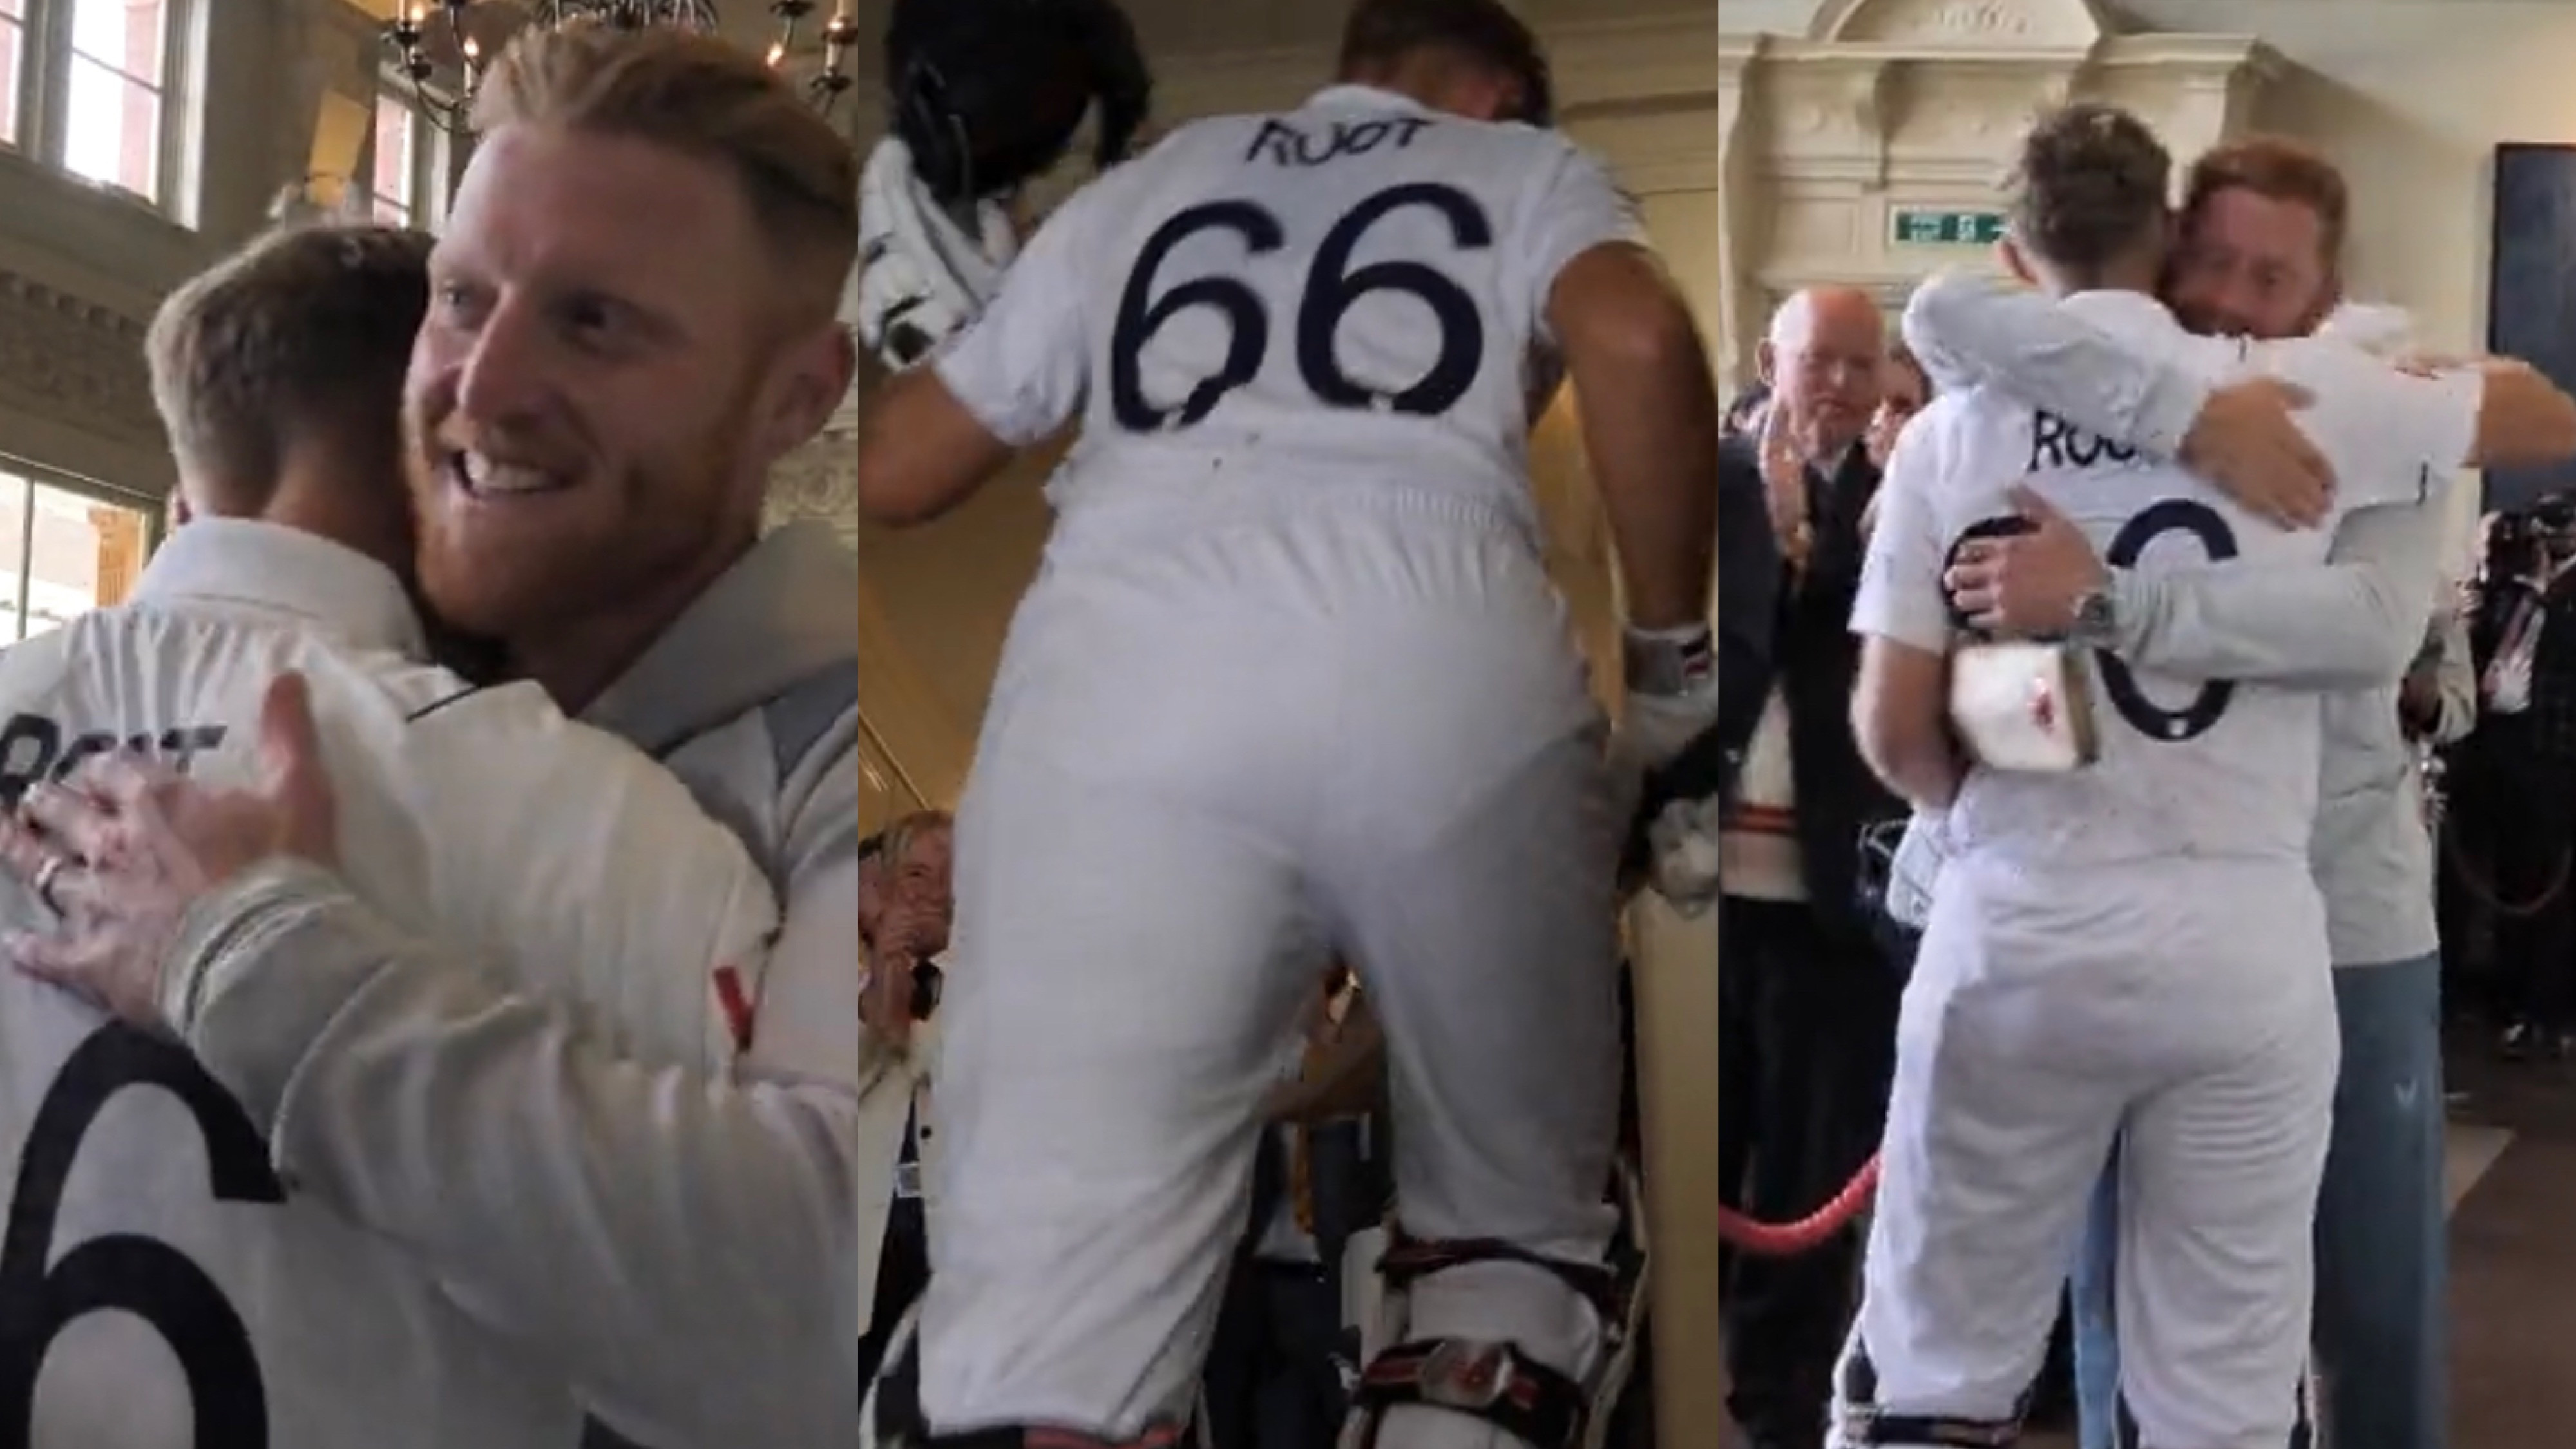 ENG v NZ 2022: WATCH - Joe Root gets a hero's welcome in Lord's longroom; teammates give him warm hugs